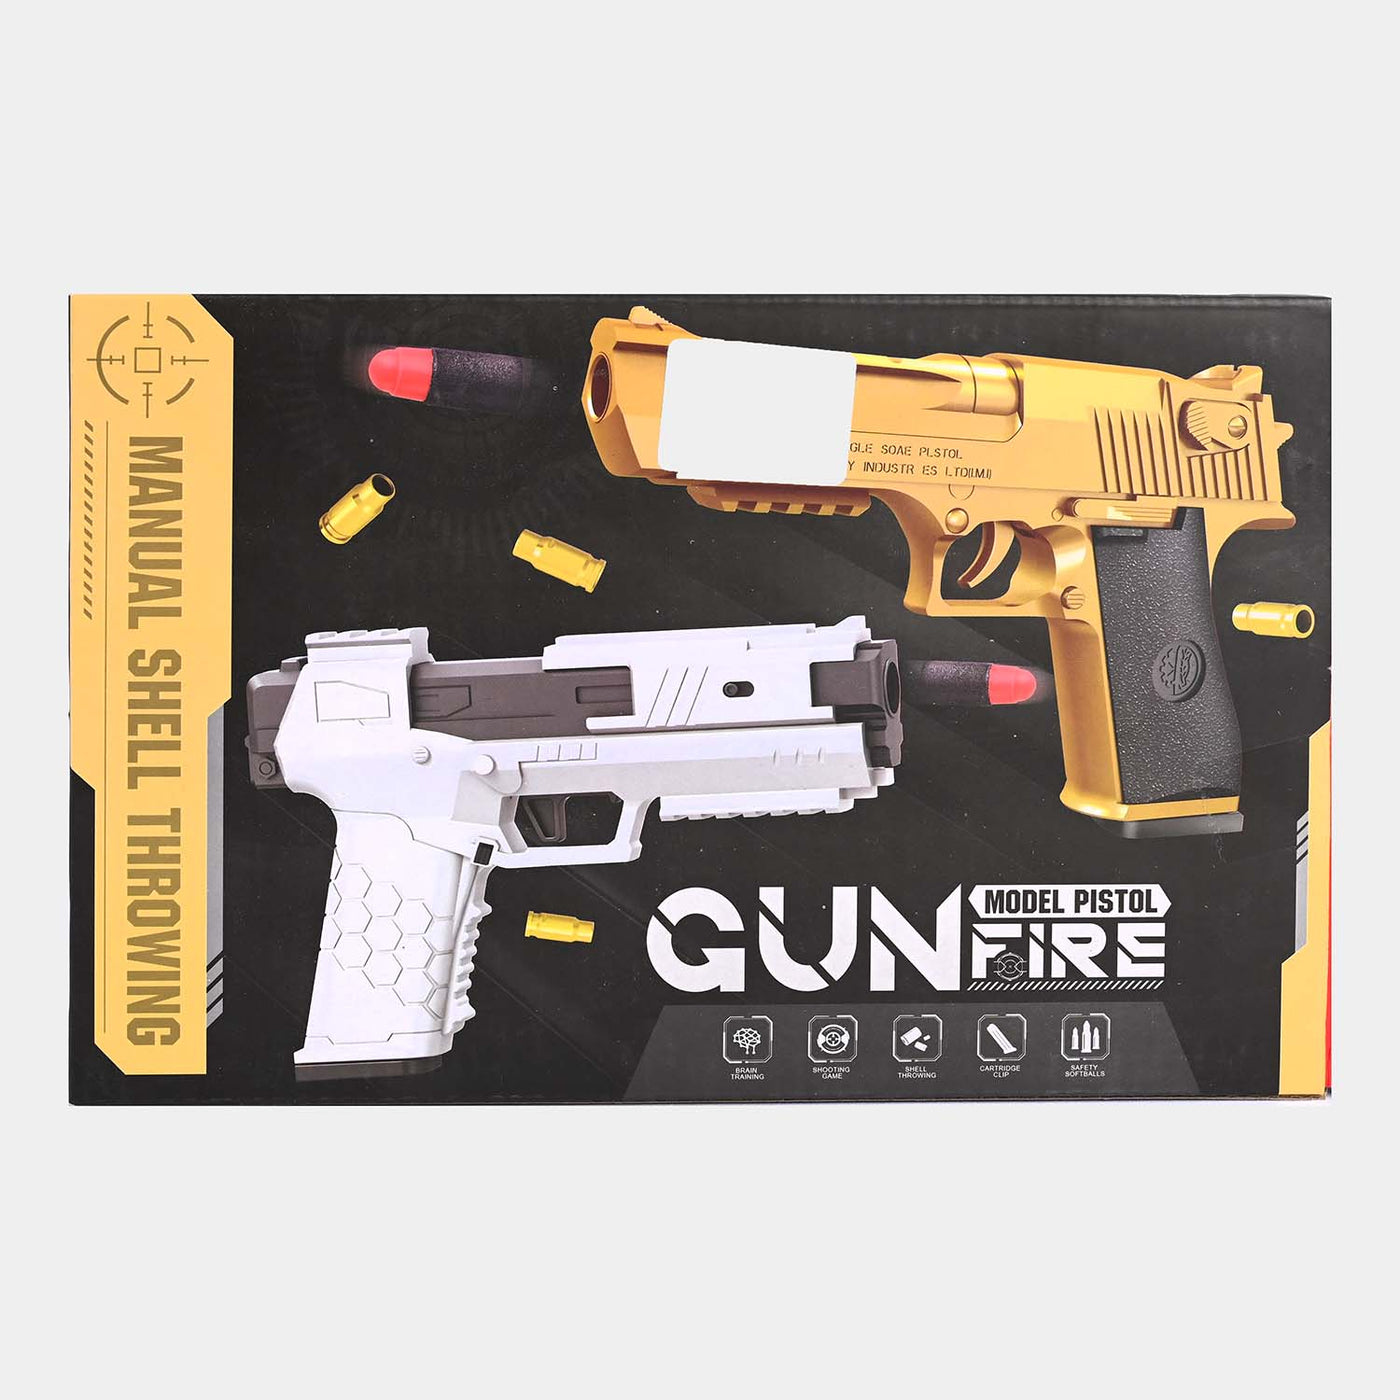 Manual Soft Bullet Gun Shell Case Toy For Kids